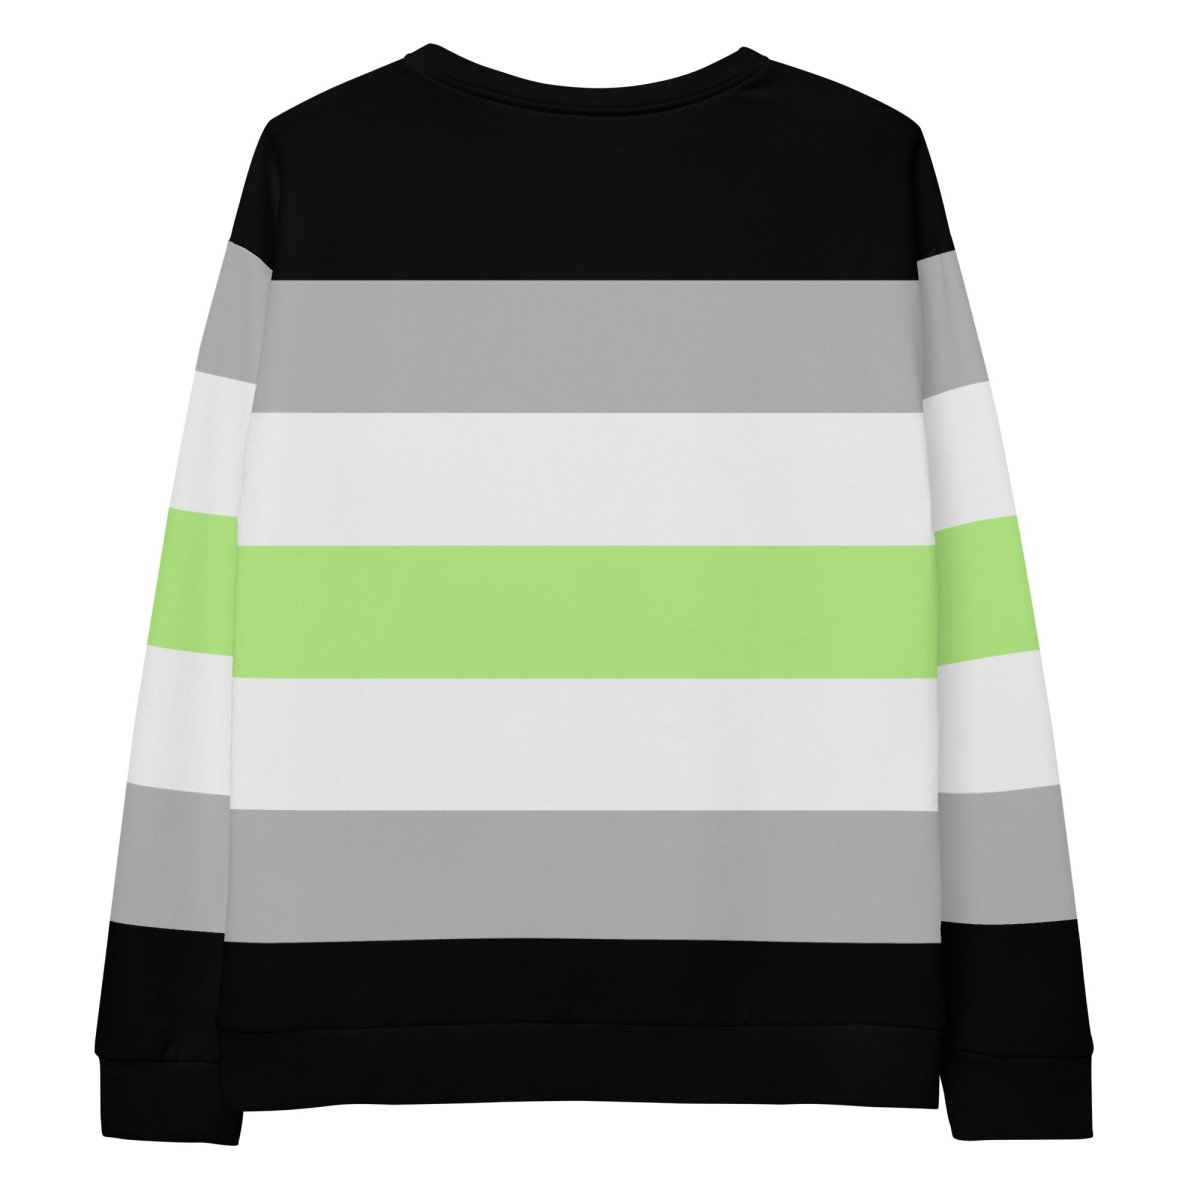 Agender Flag Sweatshirt - On Trend Shirts